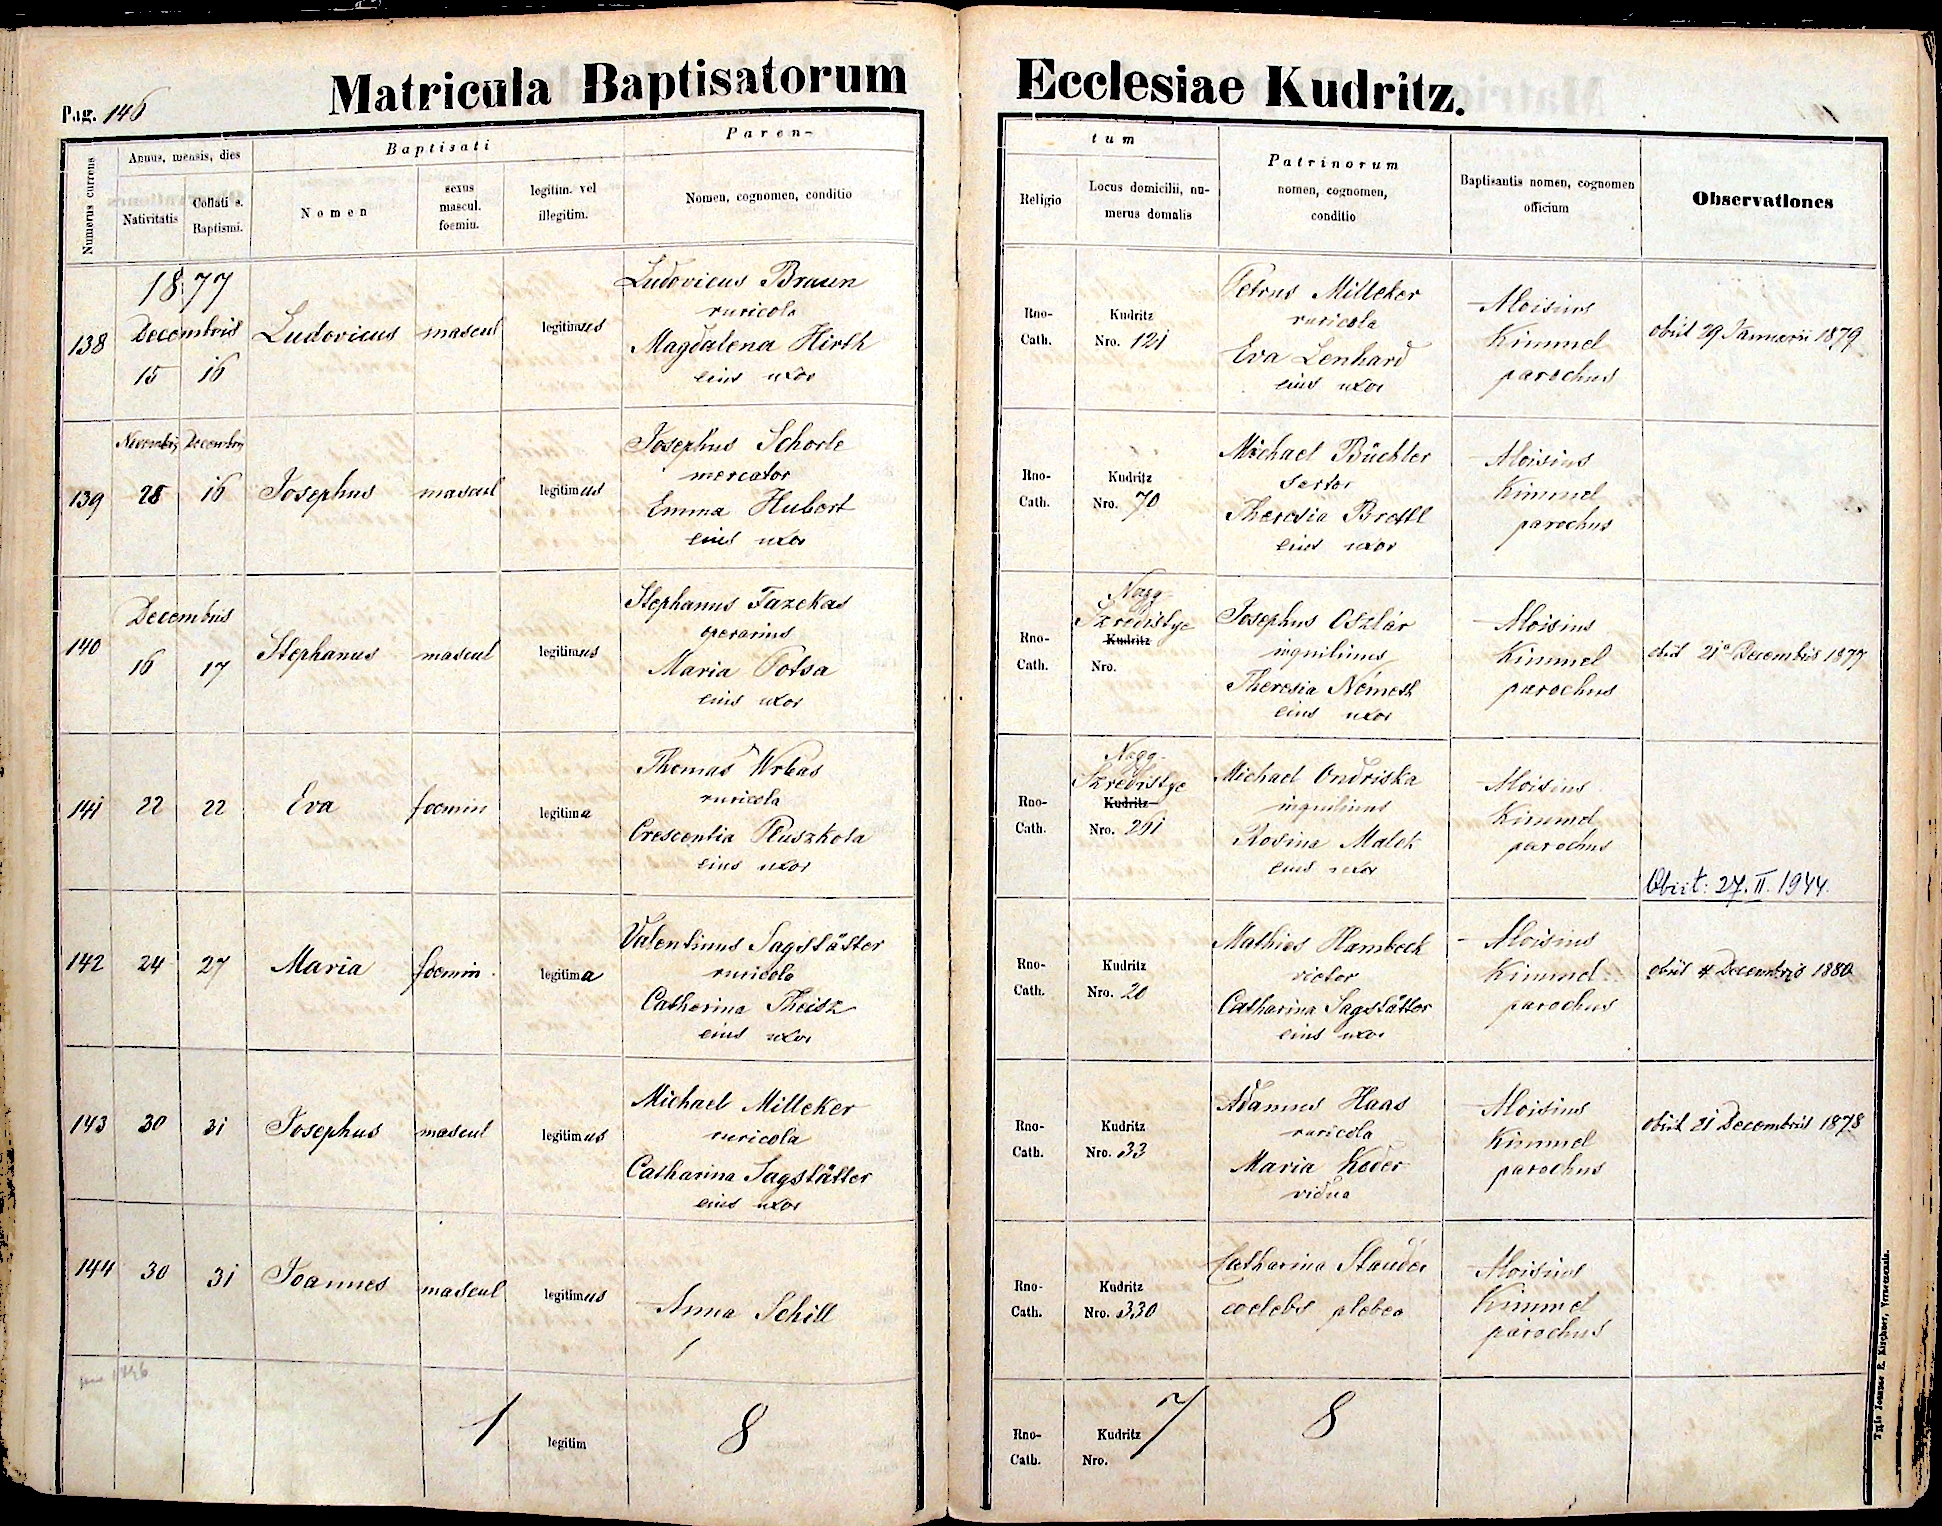 images/church_records/BIRTHS/1870-1879B/1877/146